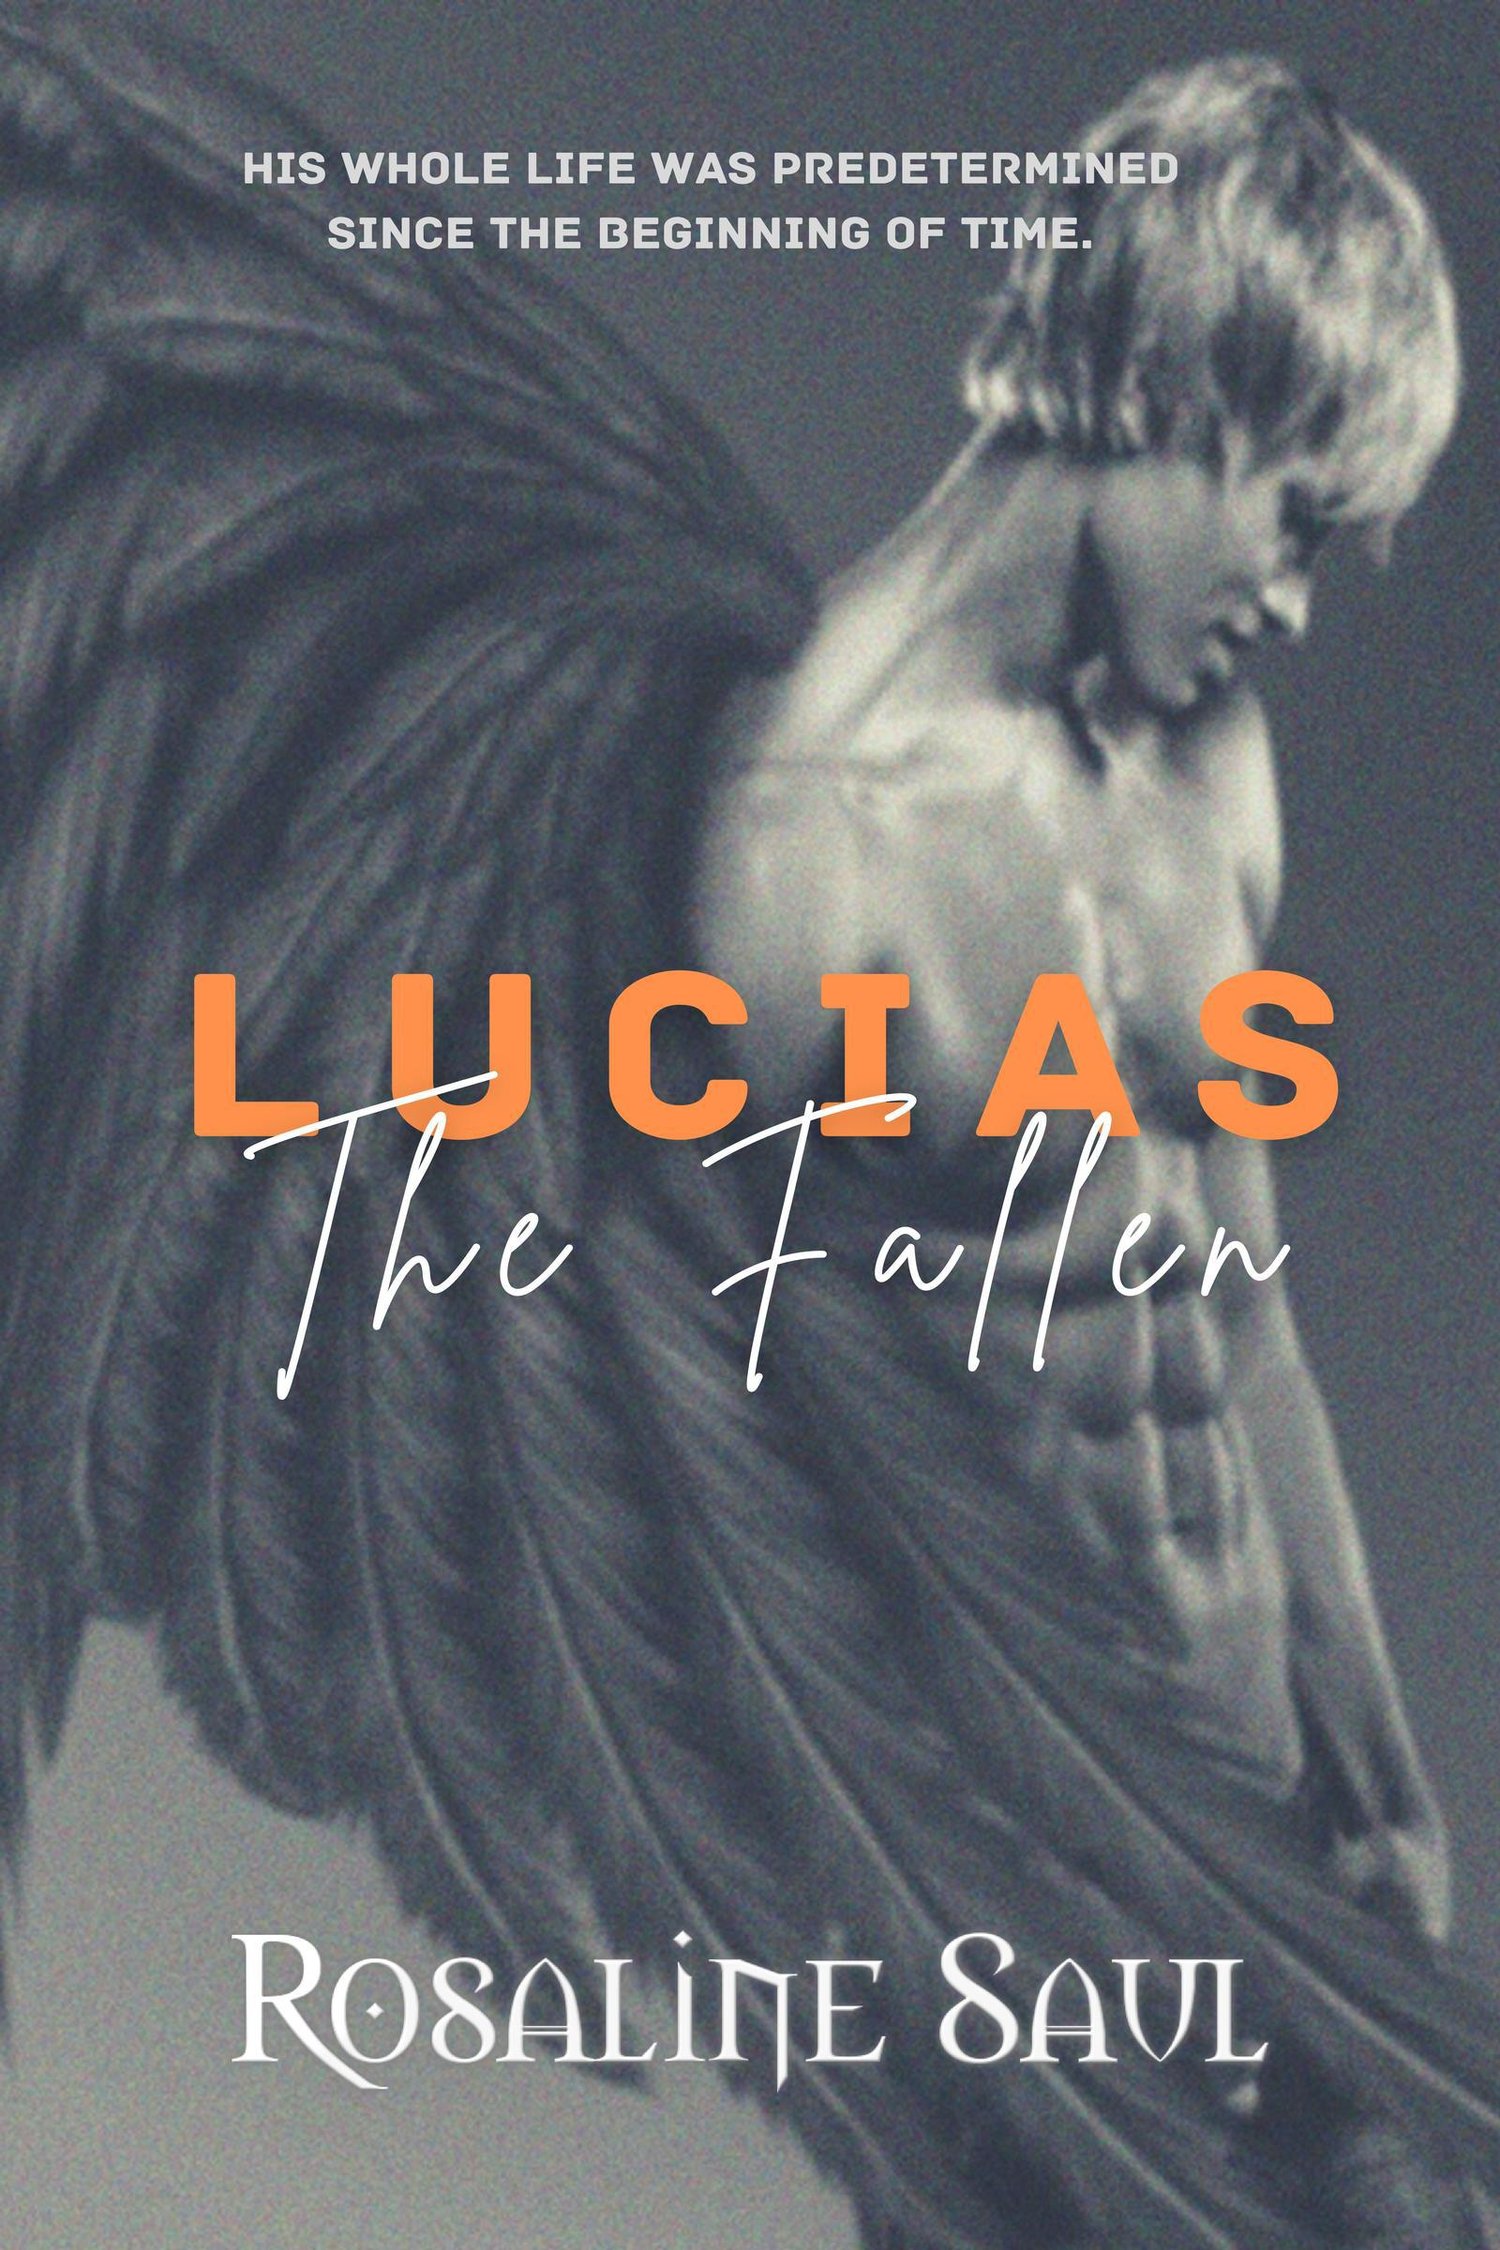 Lucias the Fallen by Rosaline Saul